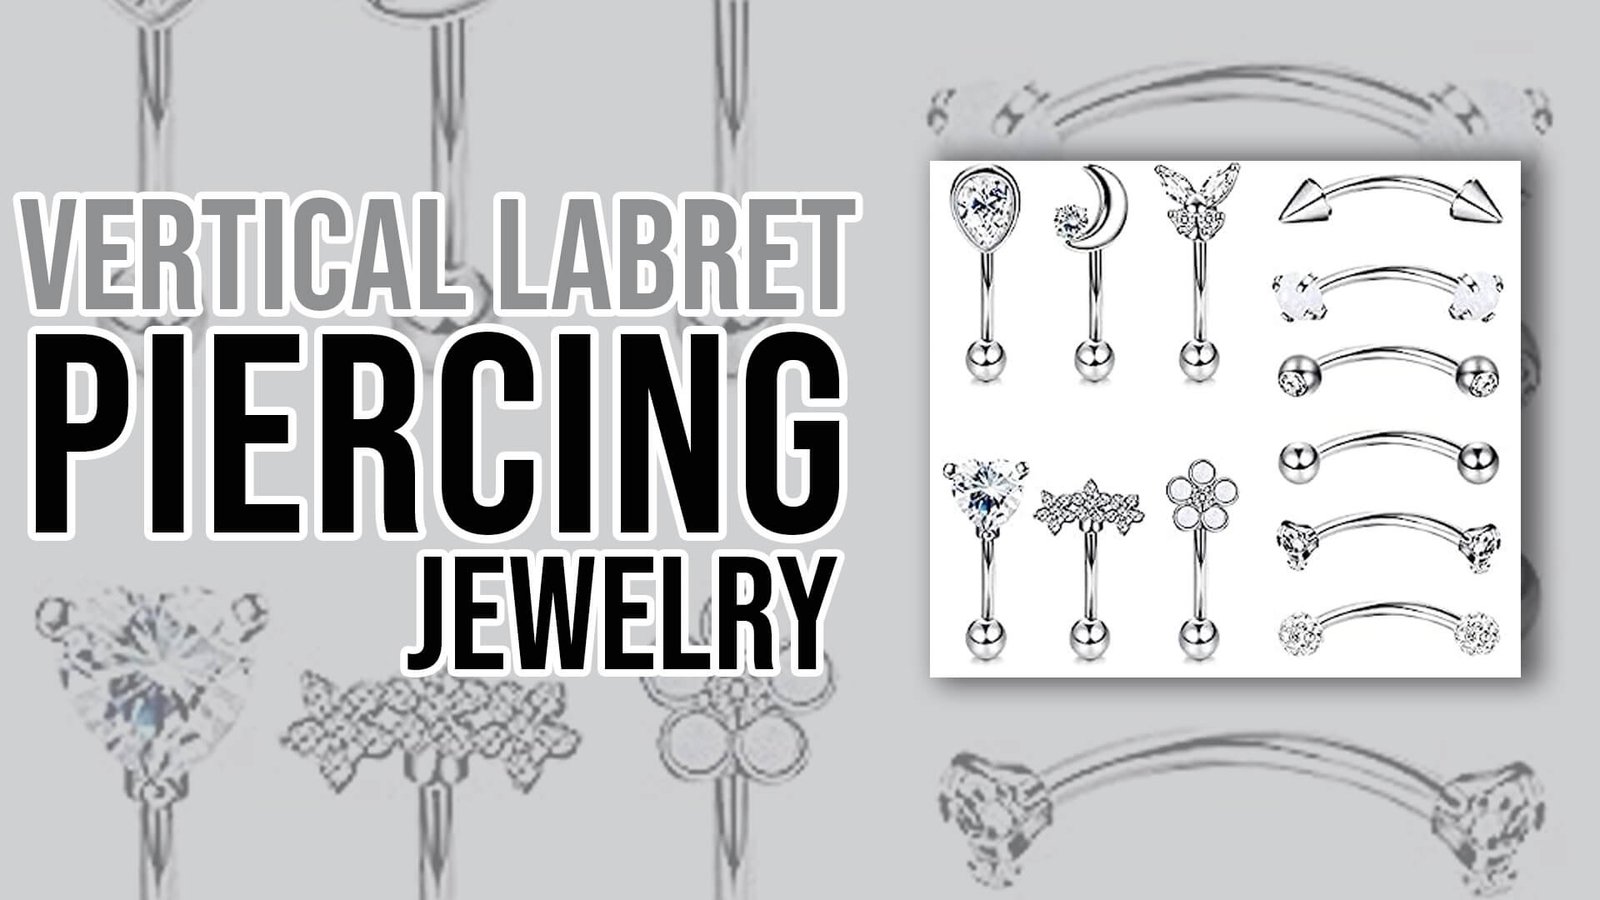 Vertical Labret Piercing Jewelry